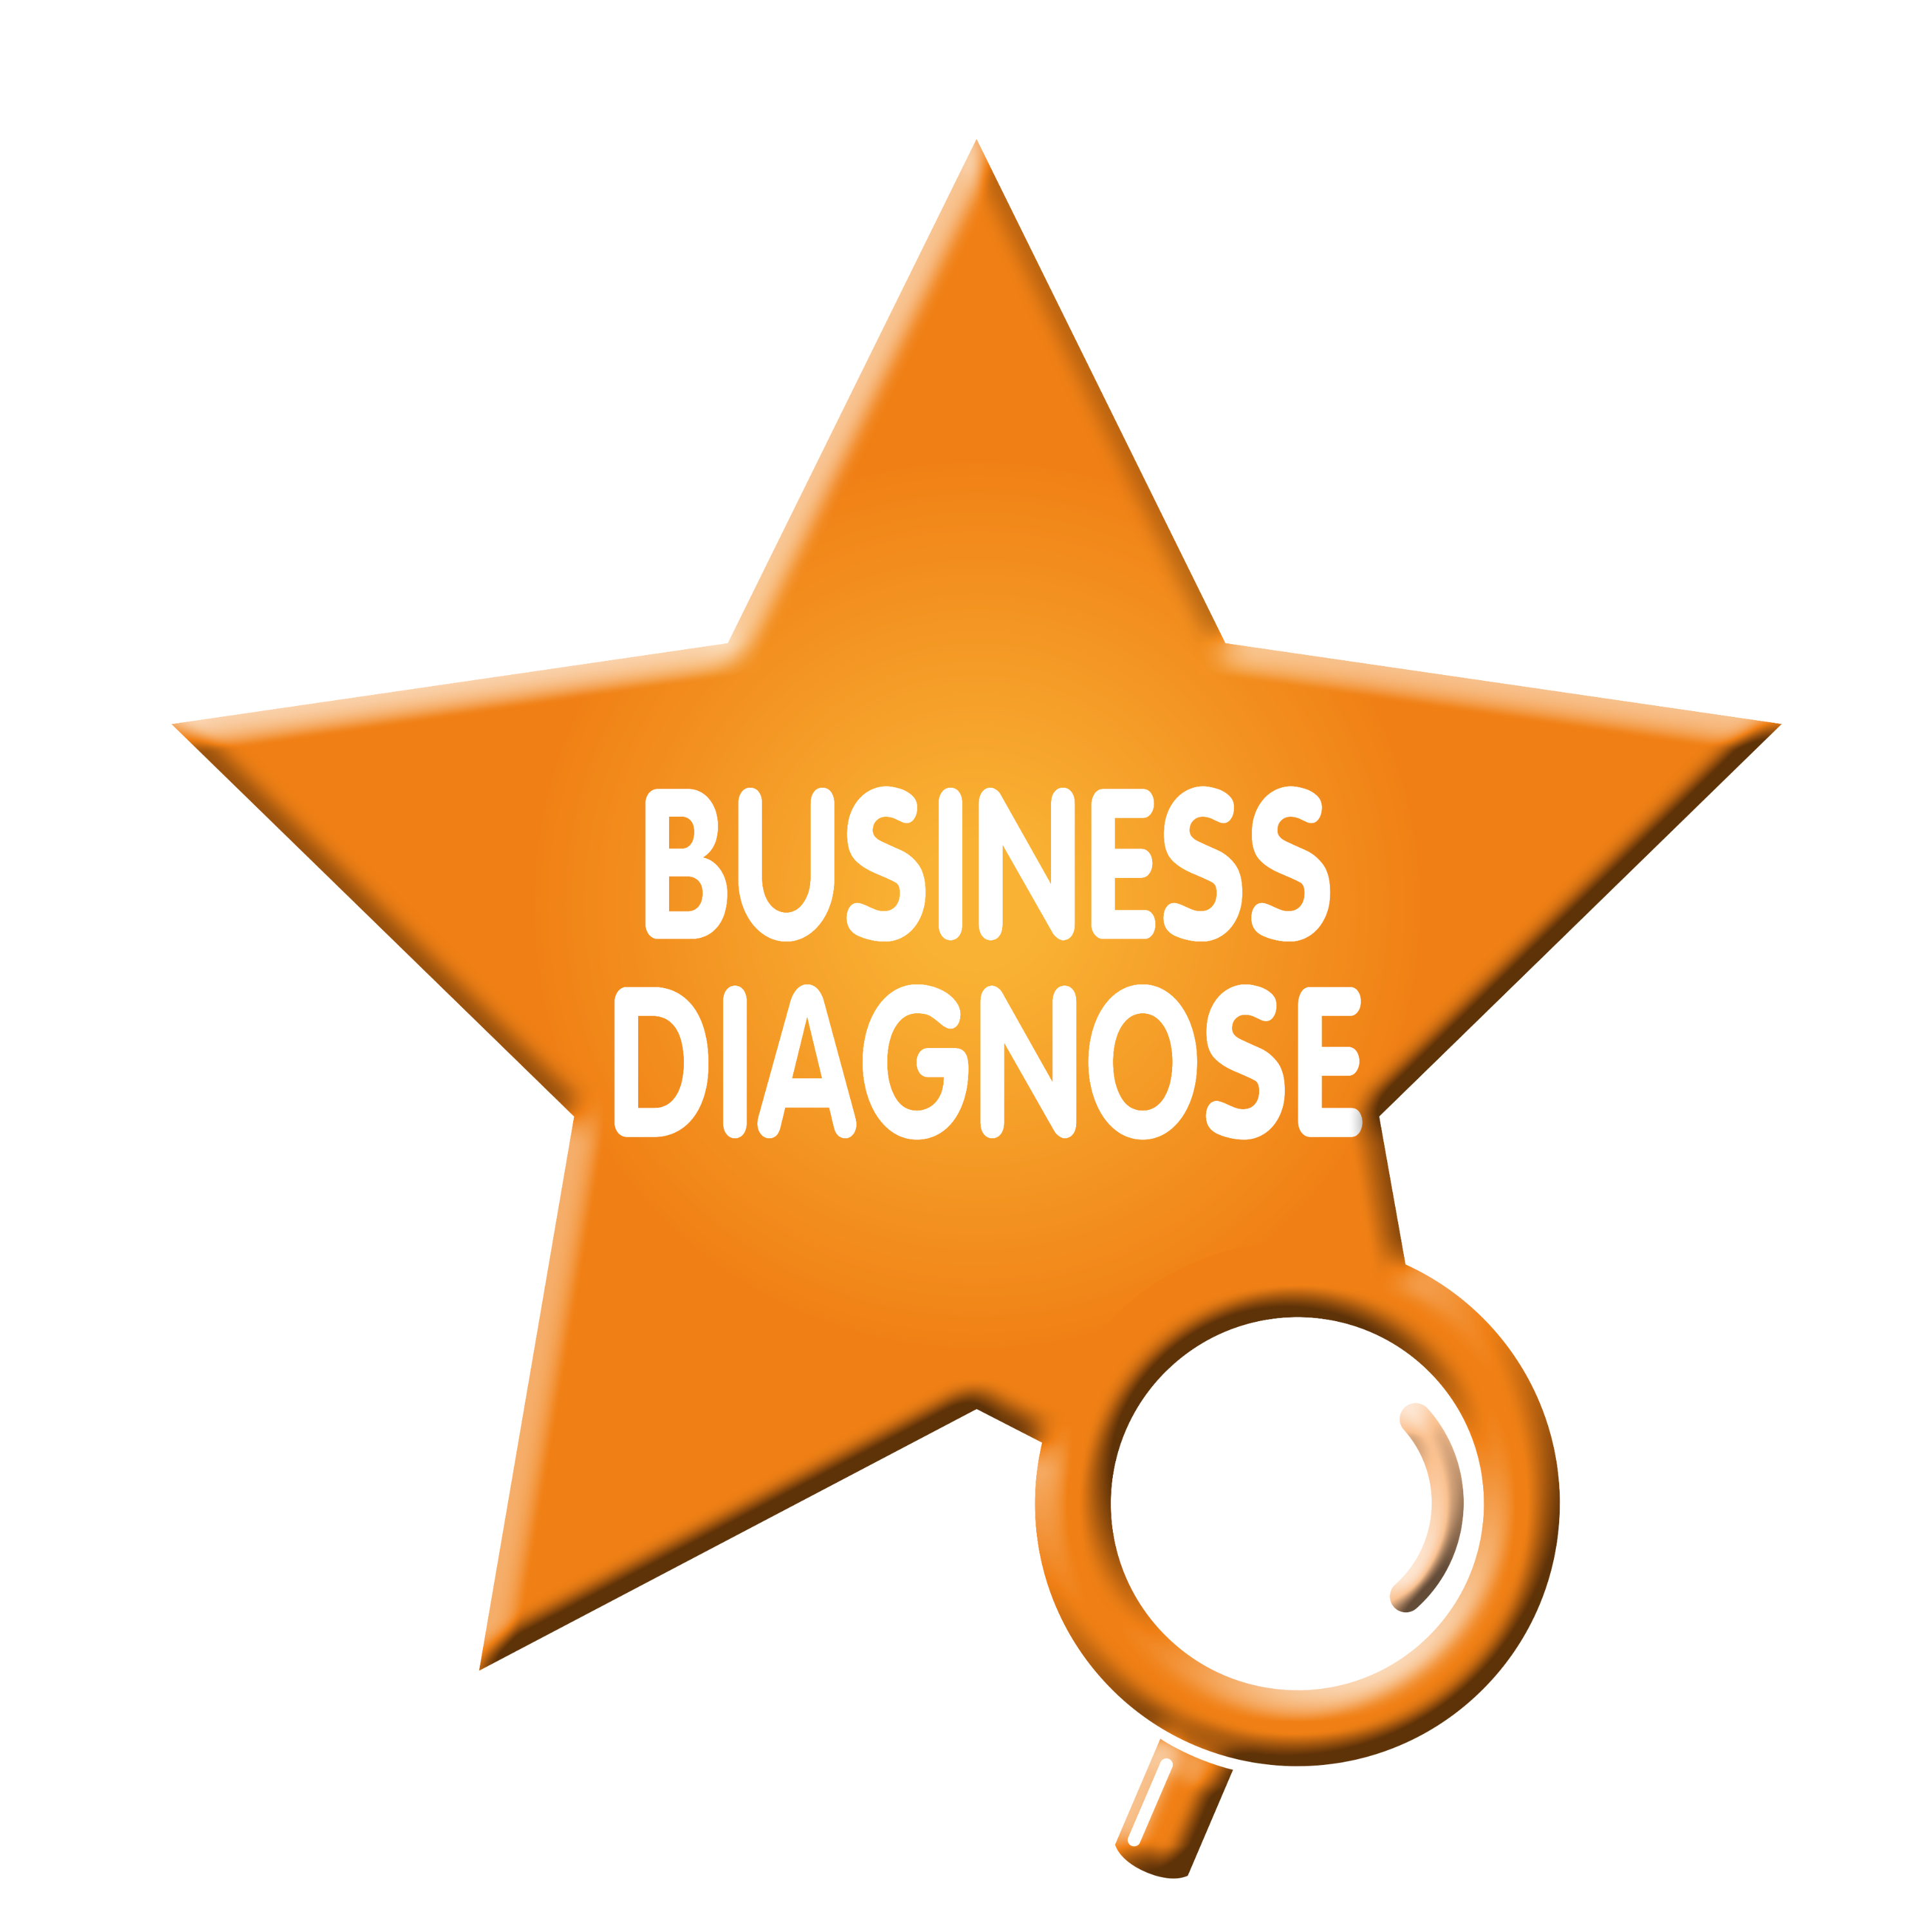 Business Diagnose